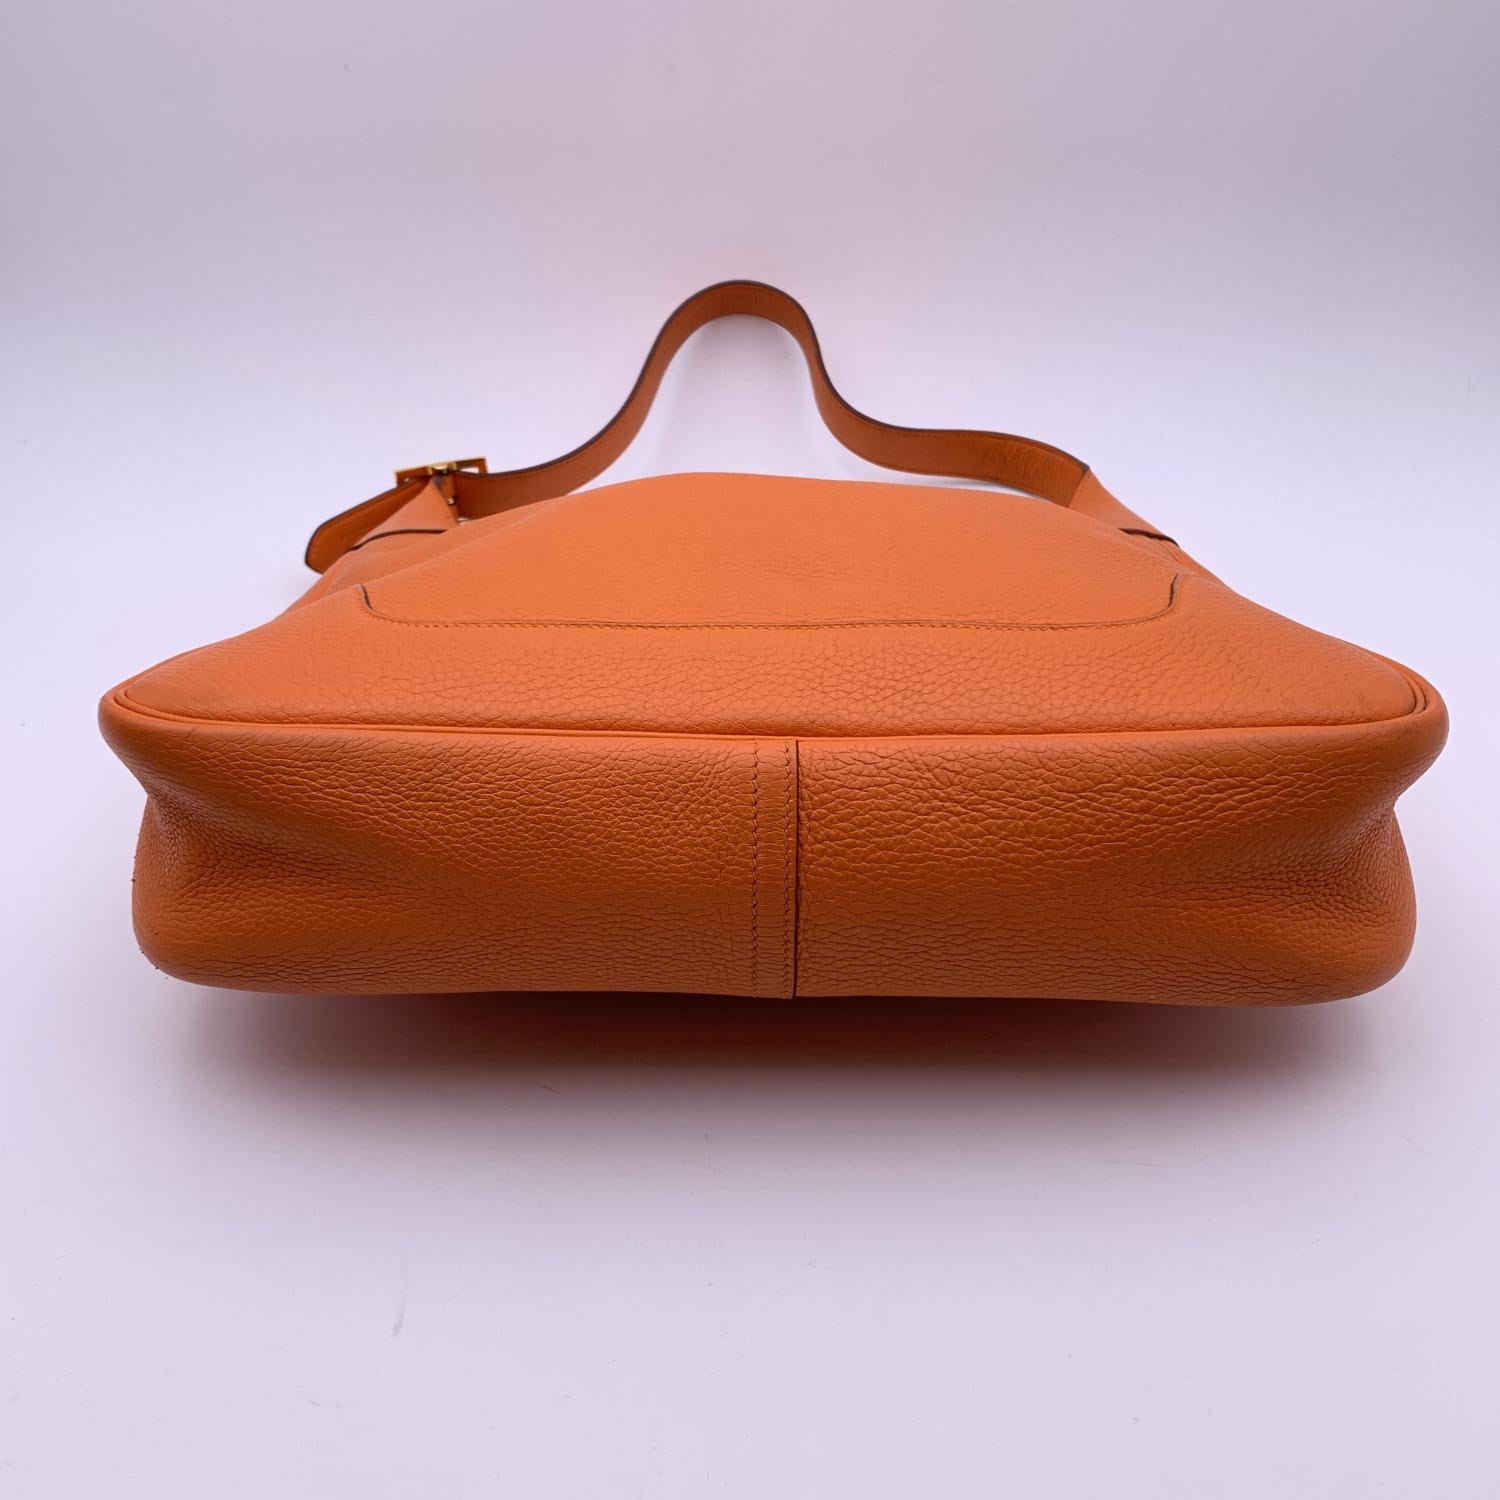 Hermes Orange Leather Sac Trim II 35 Hobo Shoulder Bag 4